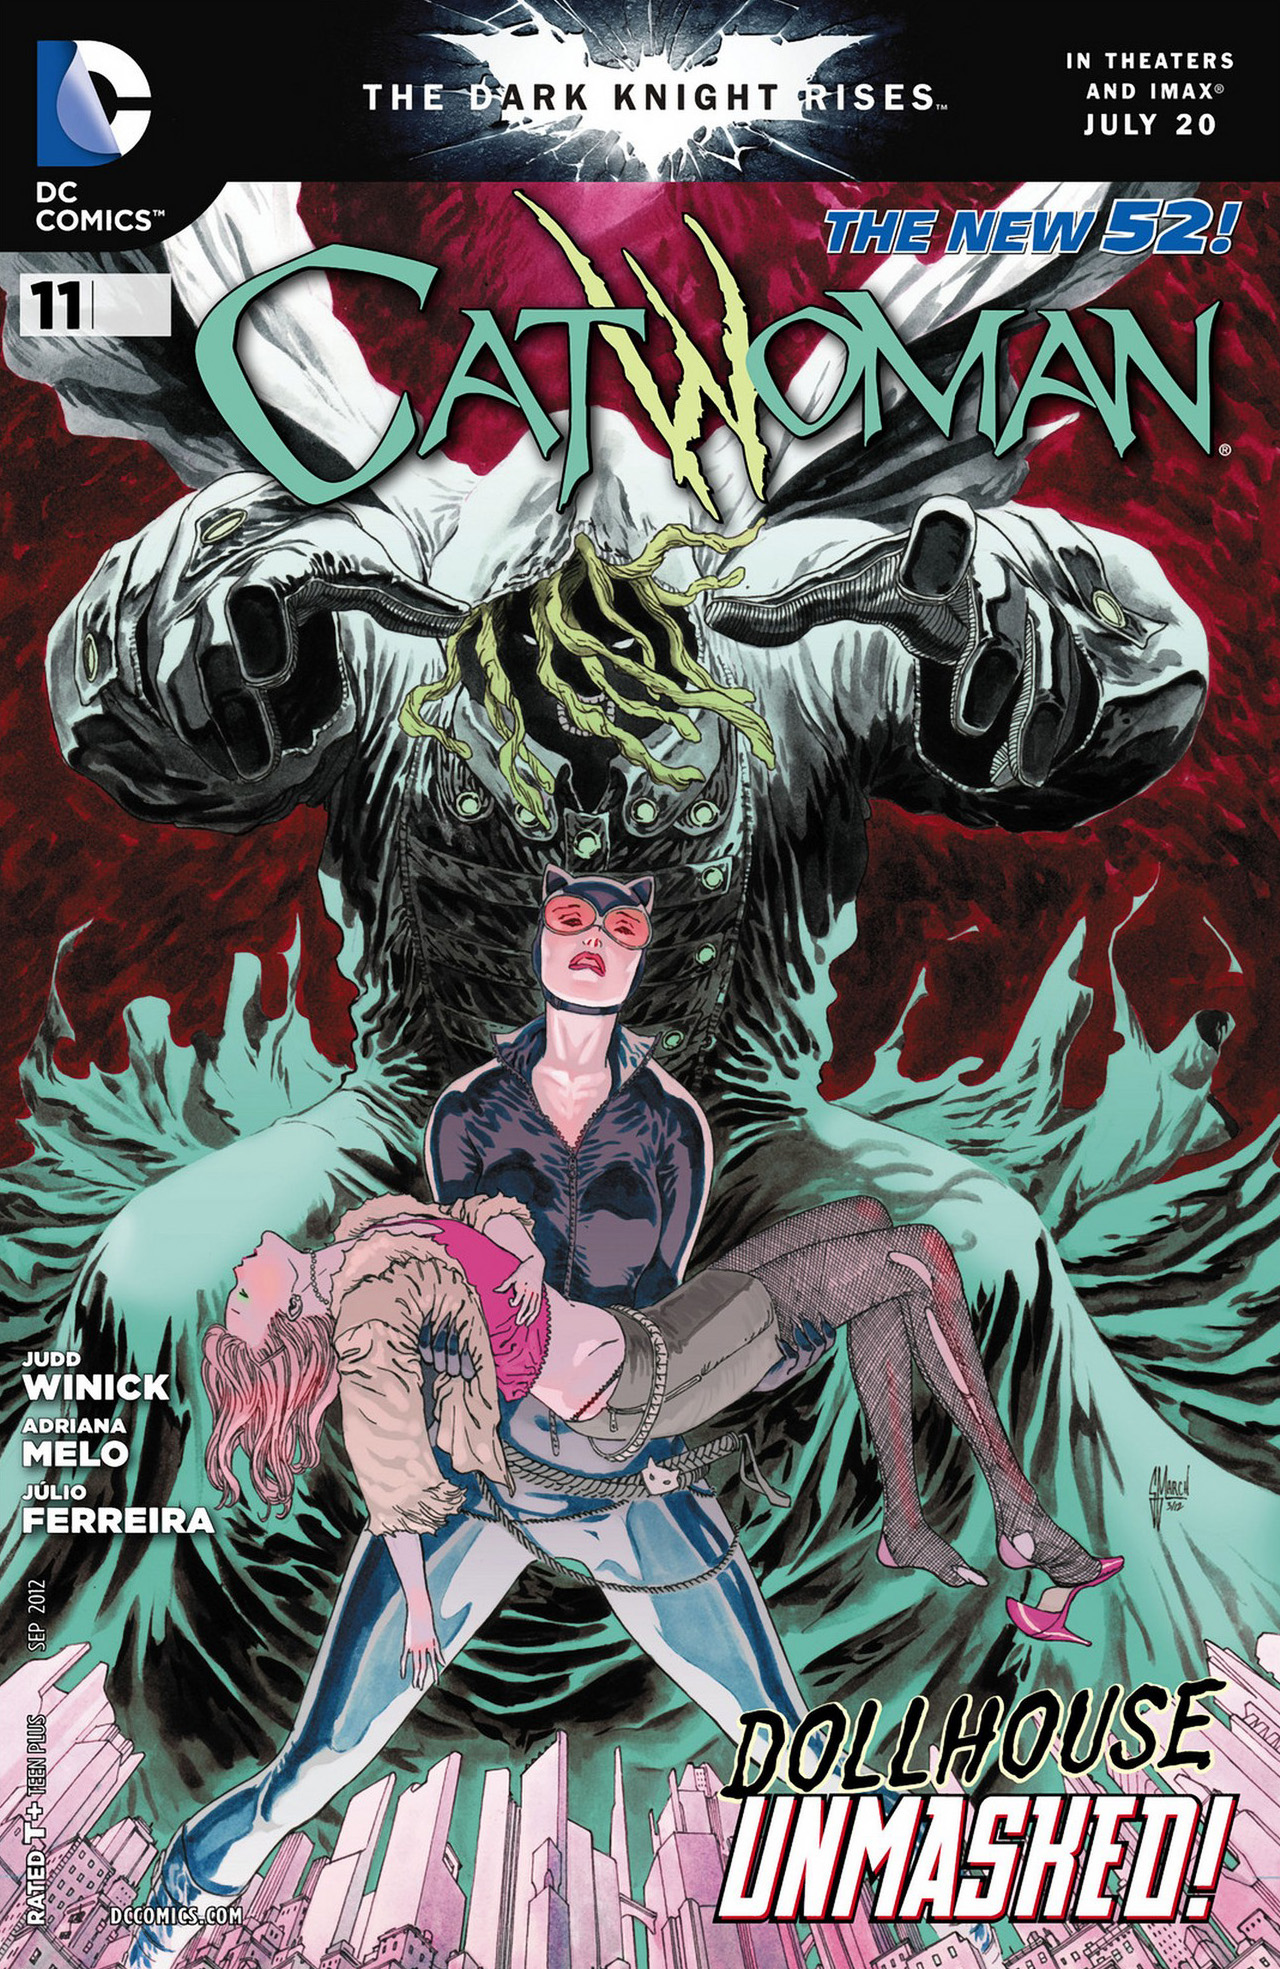 Catwoman Volume 4 Issue 11 Batman Wiki Fandom Powered By Wikia